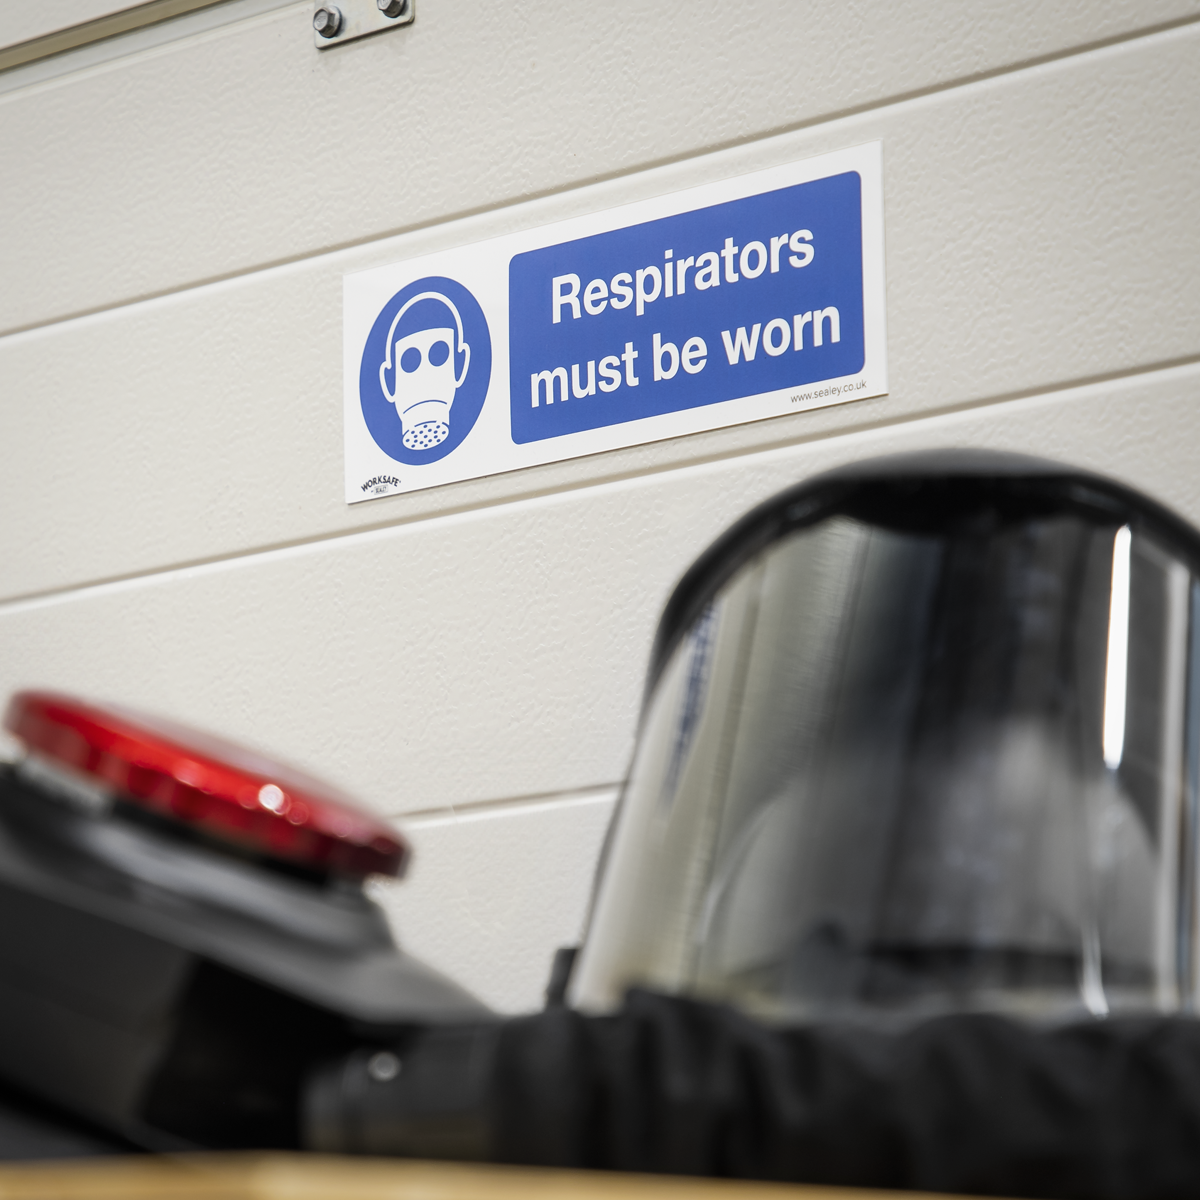 Mandatory Safety Sign - Respirators Must Be Worn - Rigid Plastic